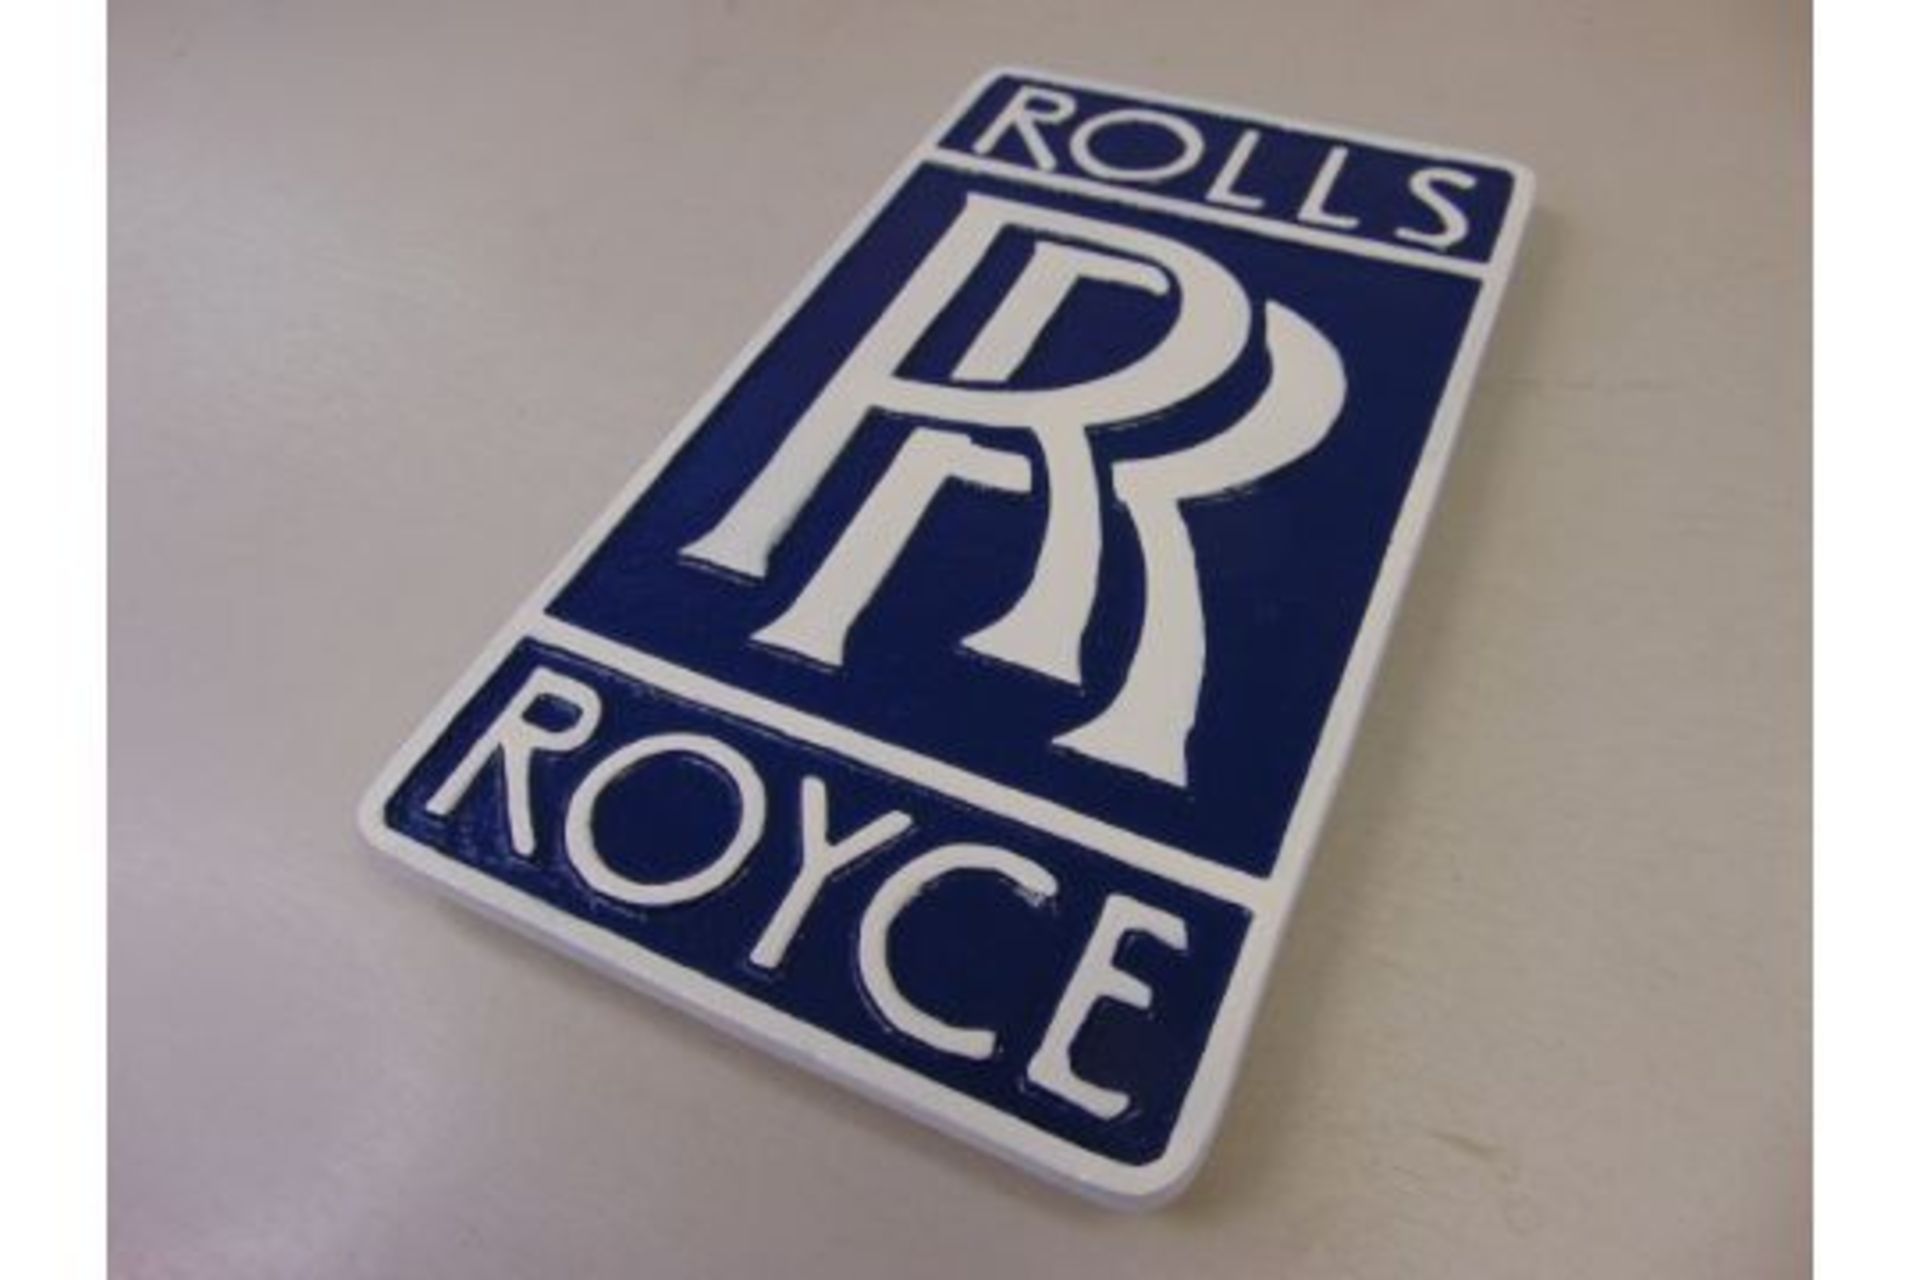 Rolls Royce Hand Painted Aluminium Hanging Sign - Image 2 of 3